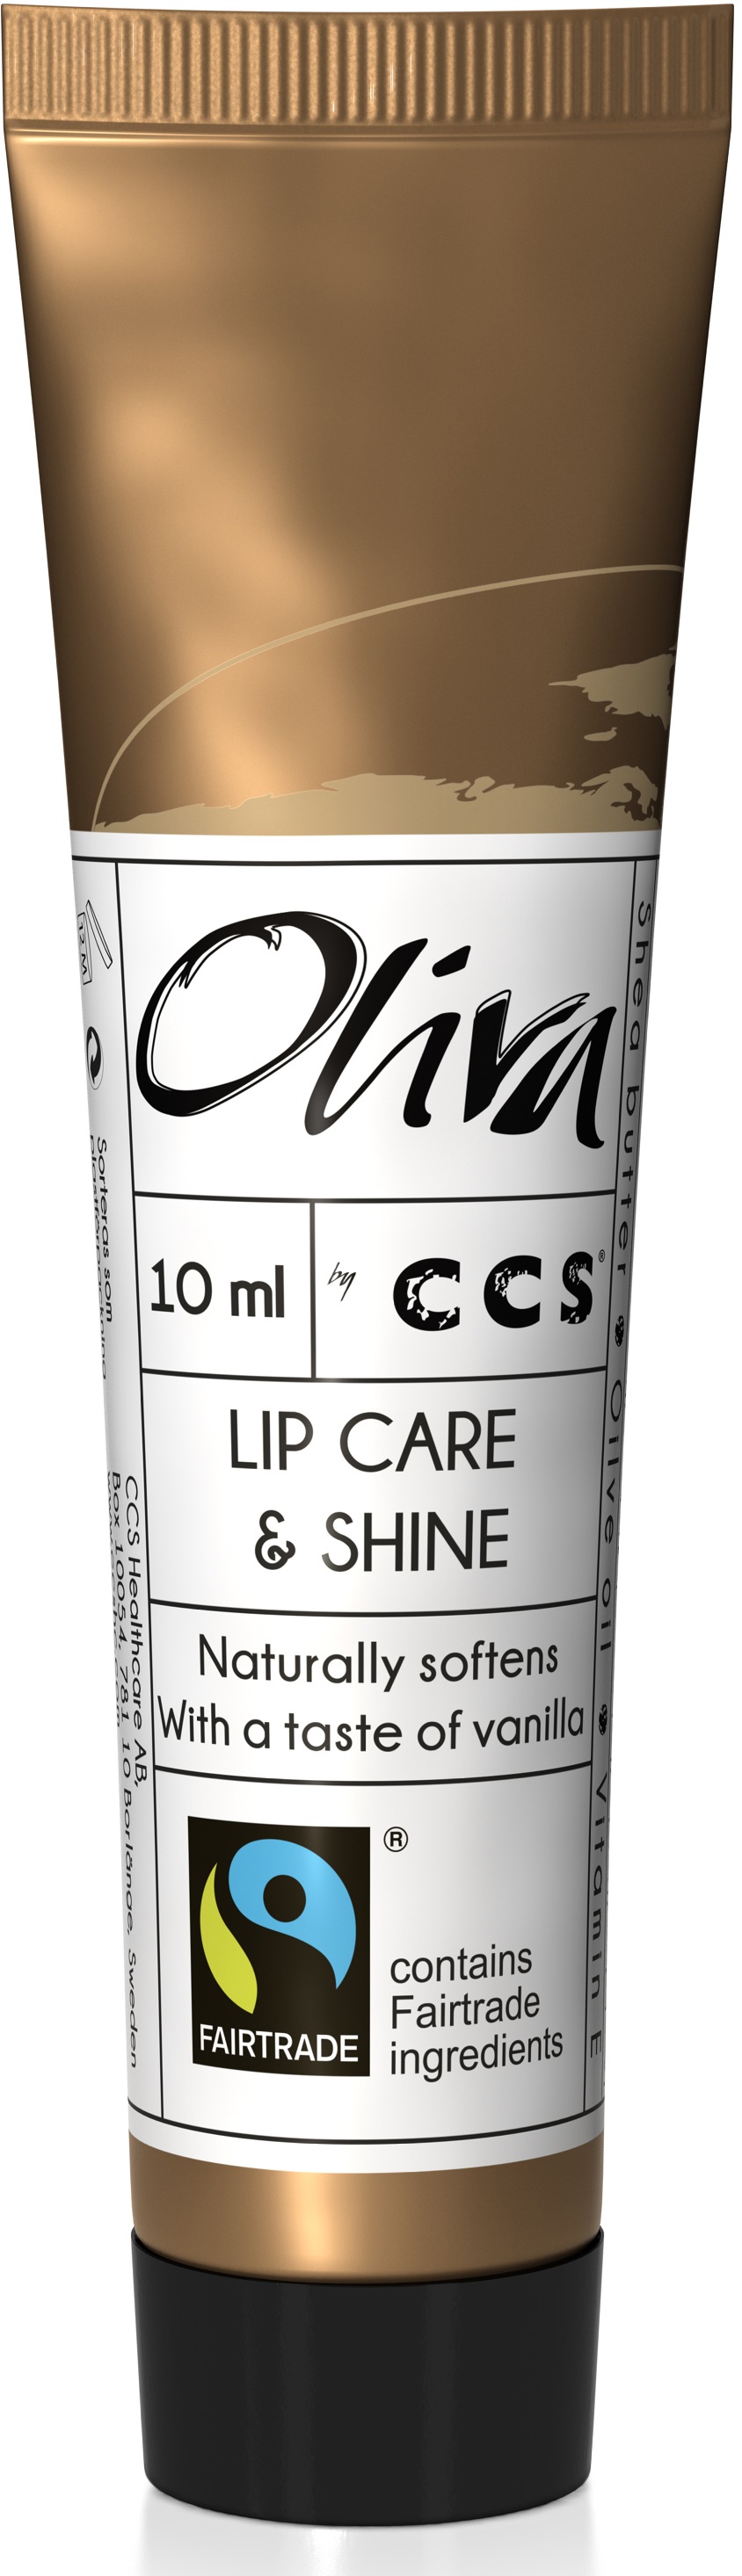 CCS Oliva Earth Lip Care & Shine 10ml